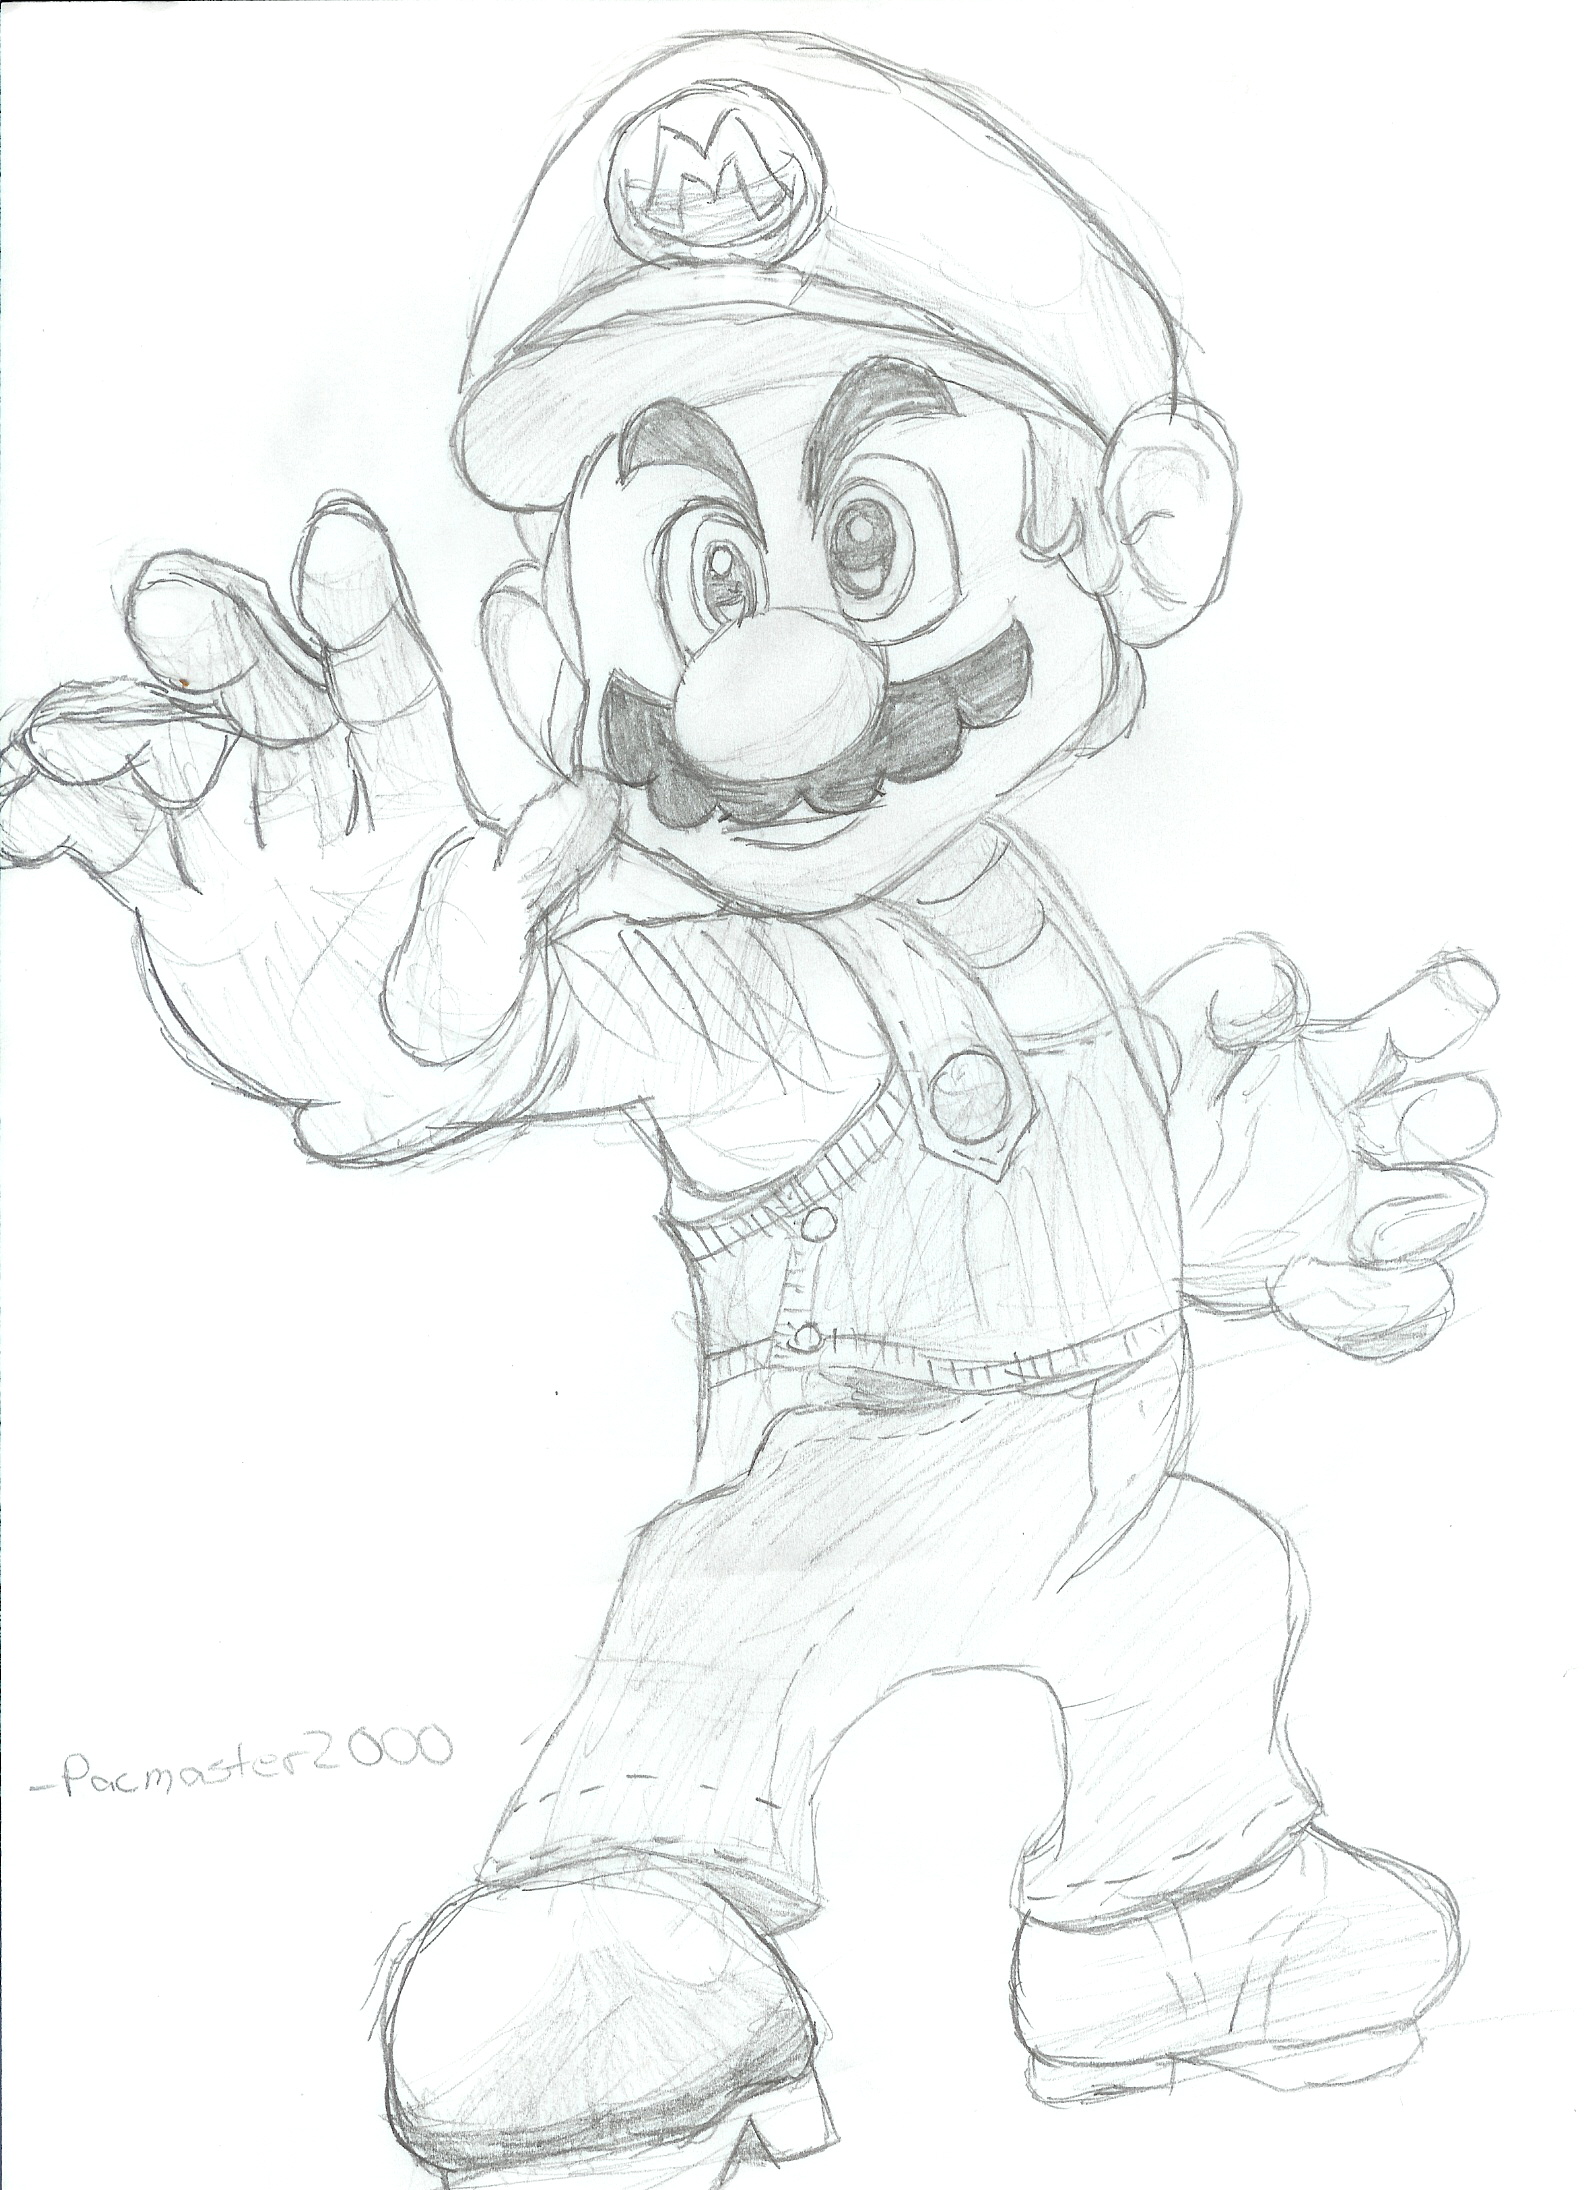 Super Smash Bros. Brawl: Mario by pacmaster2000